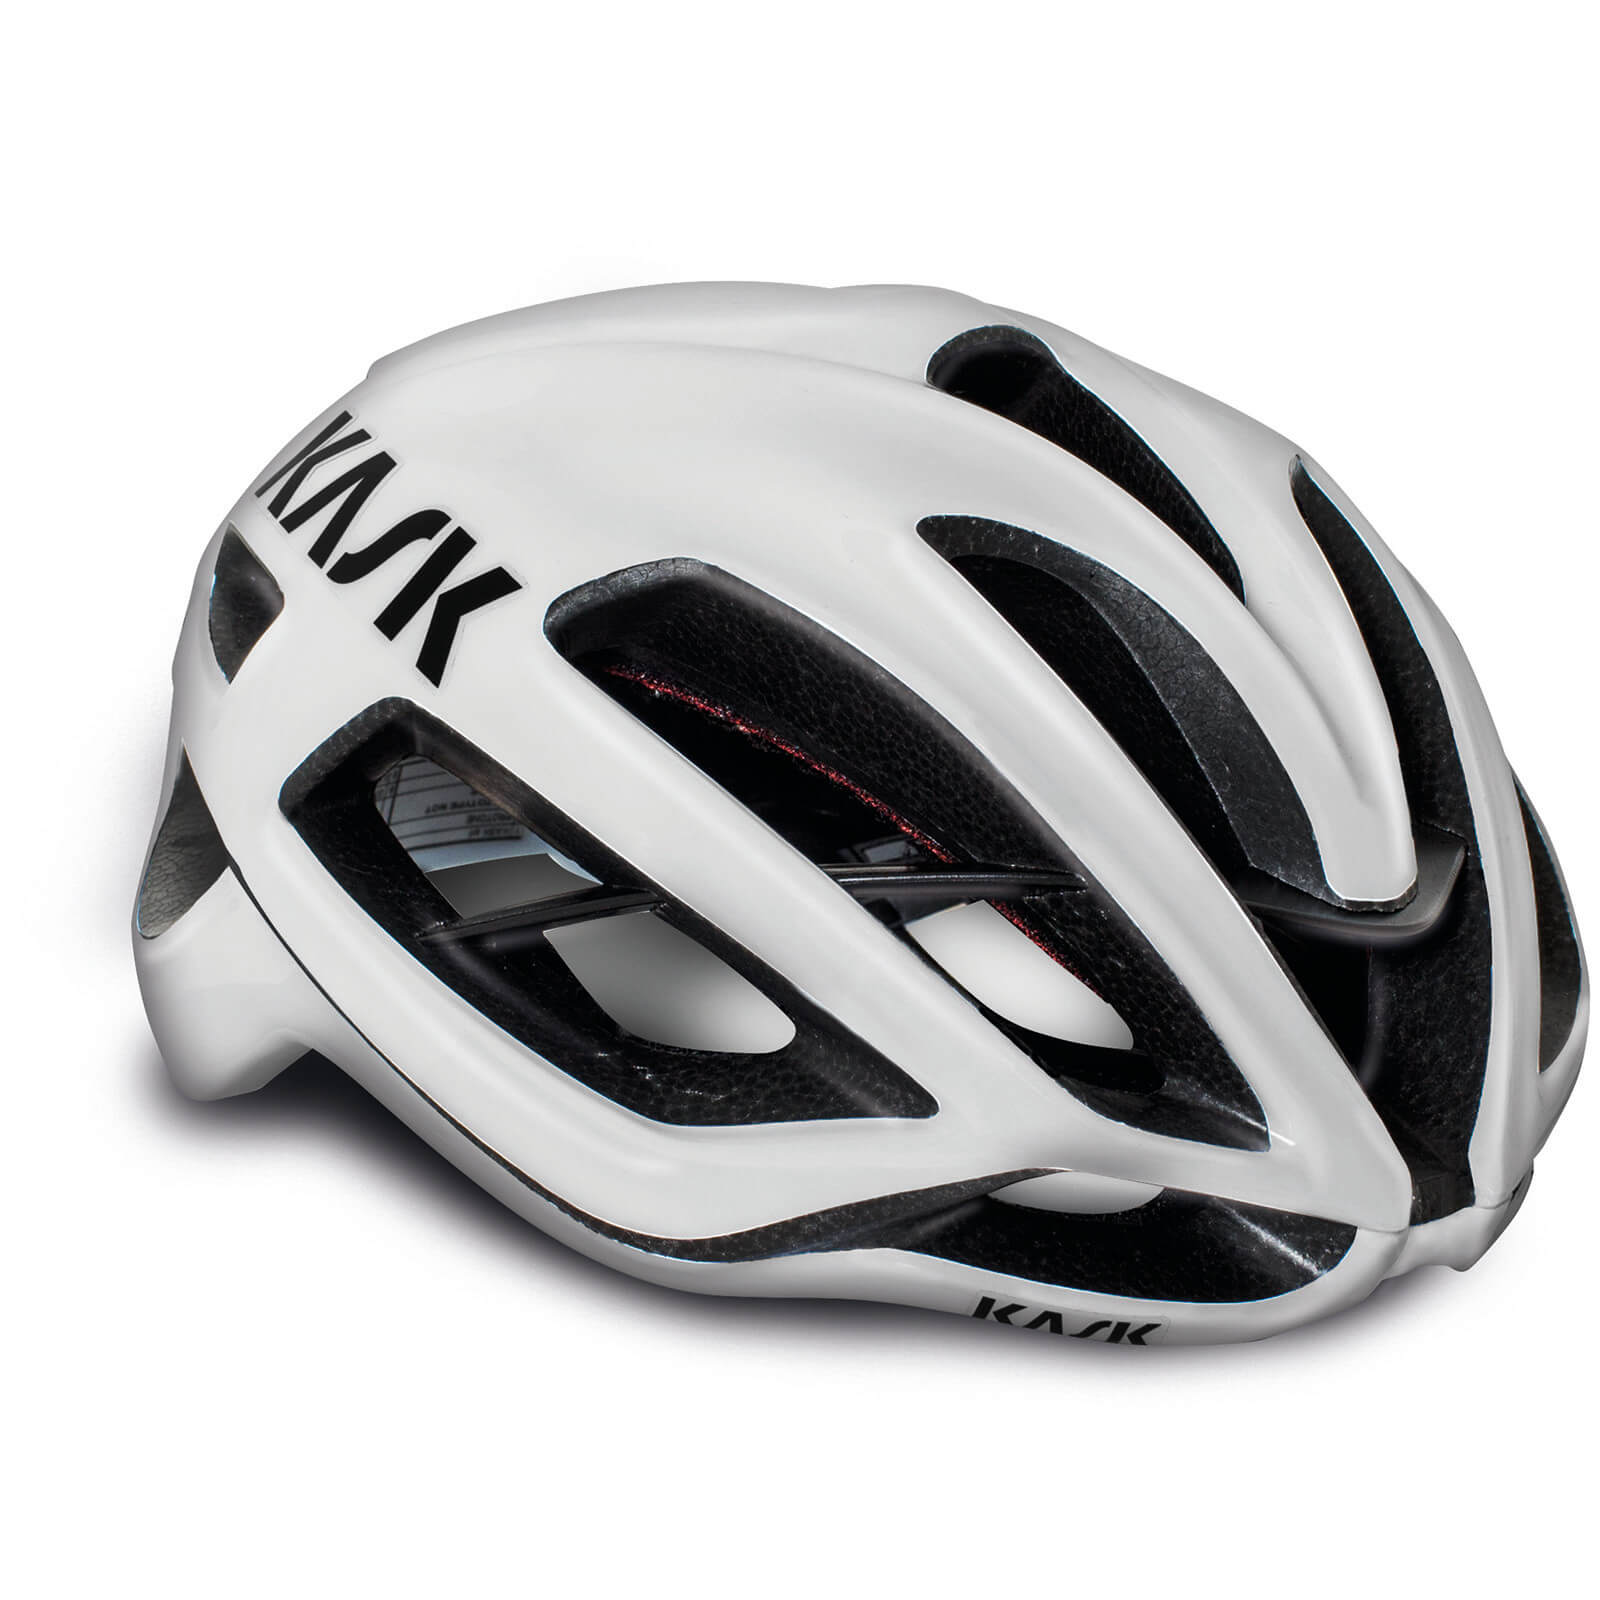 Kask Protone WG11 Road Helmet - M - White